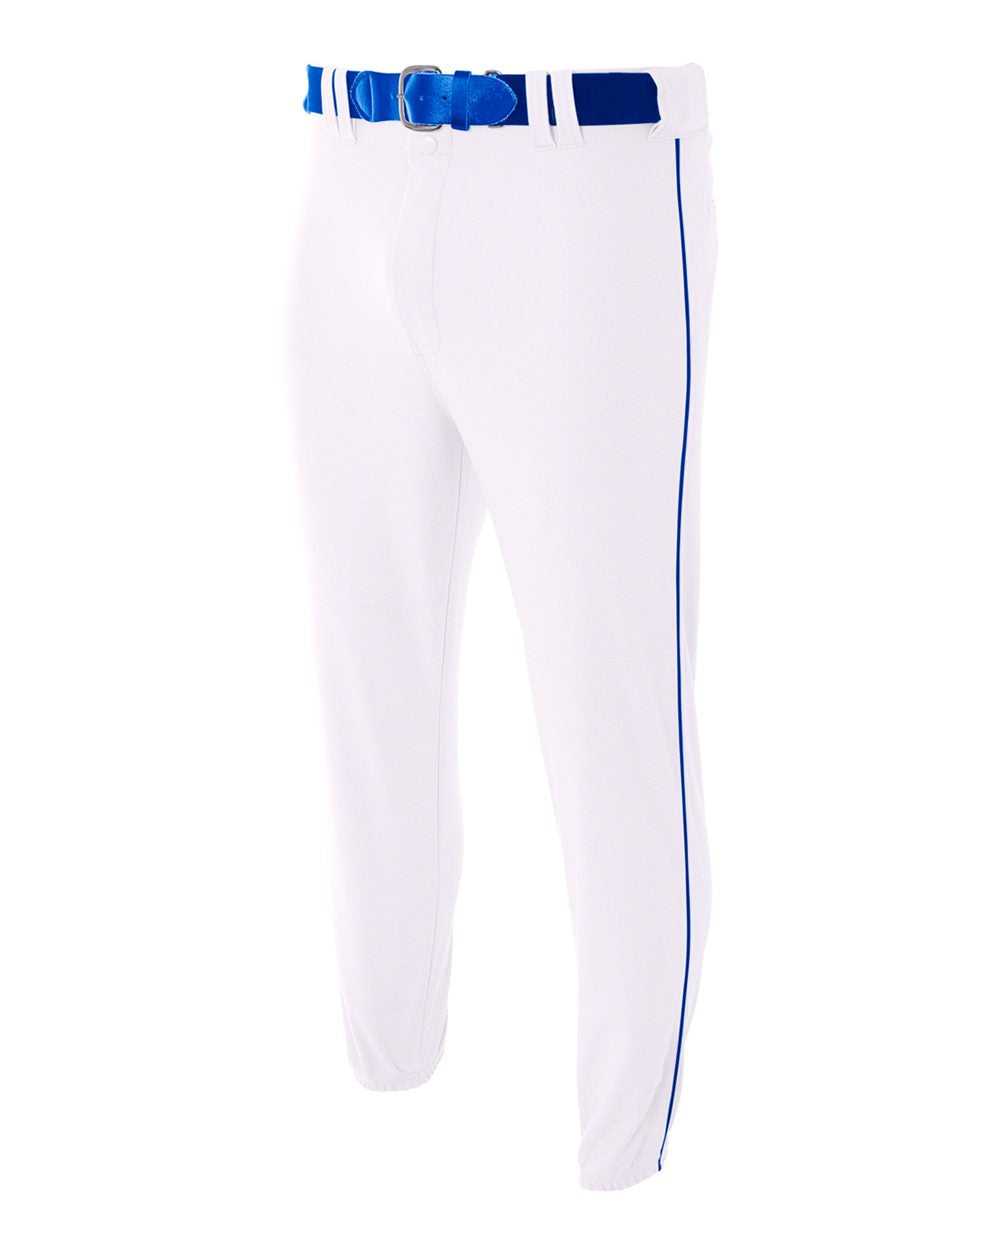 A4 NB6178 Youth Pro Style Elastic Bottom Baseball Pant - White Royal - HIT a Double